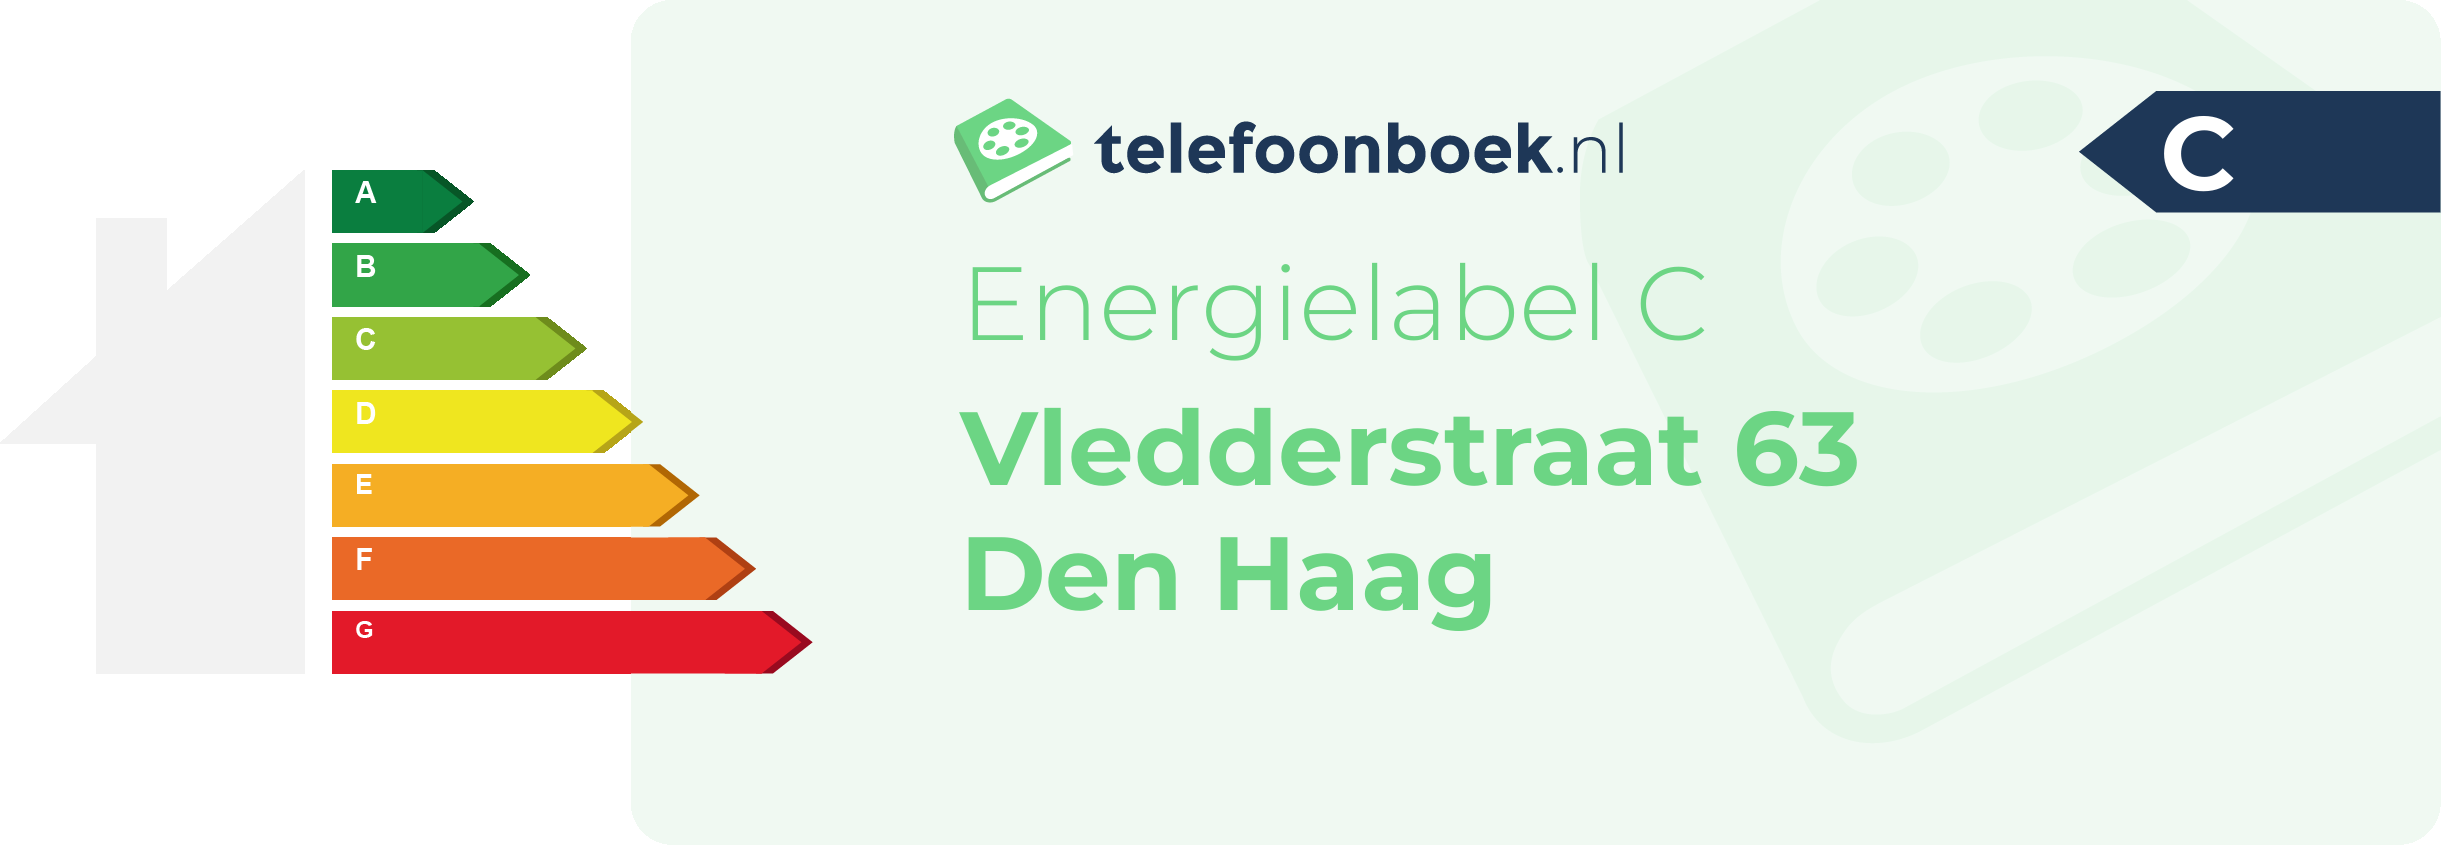 Energielabel Vledderstraat 63 Den Haag